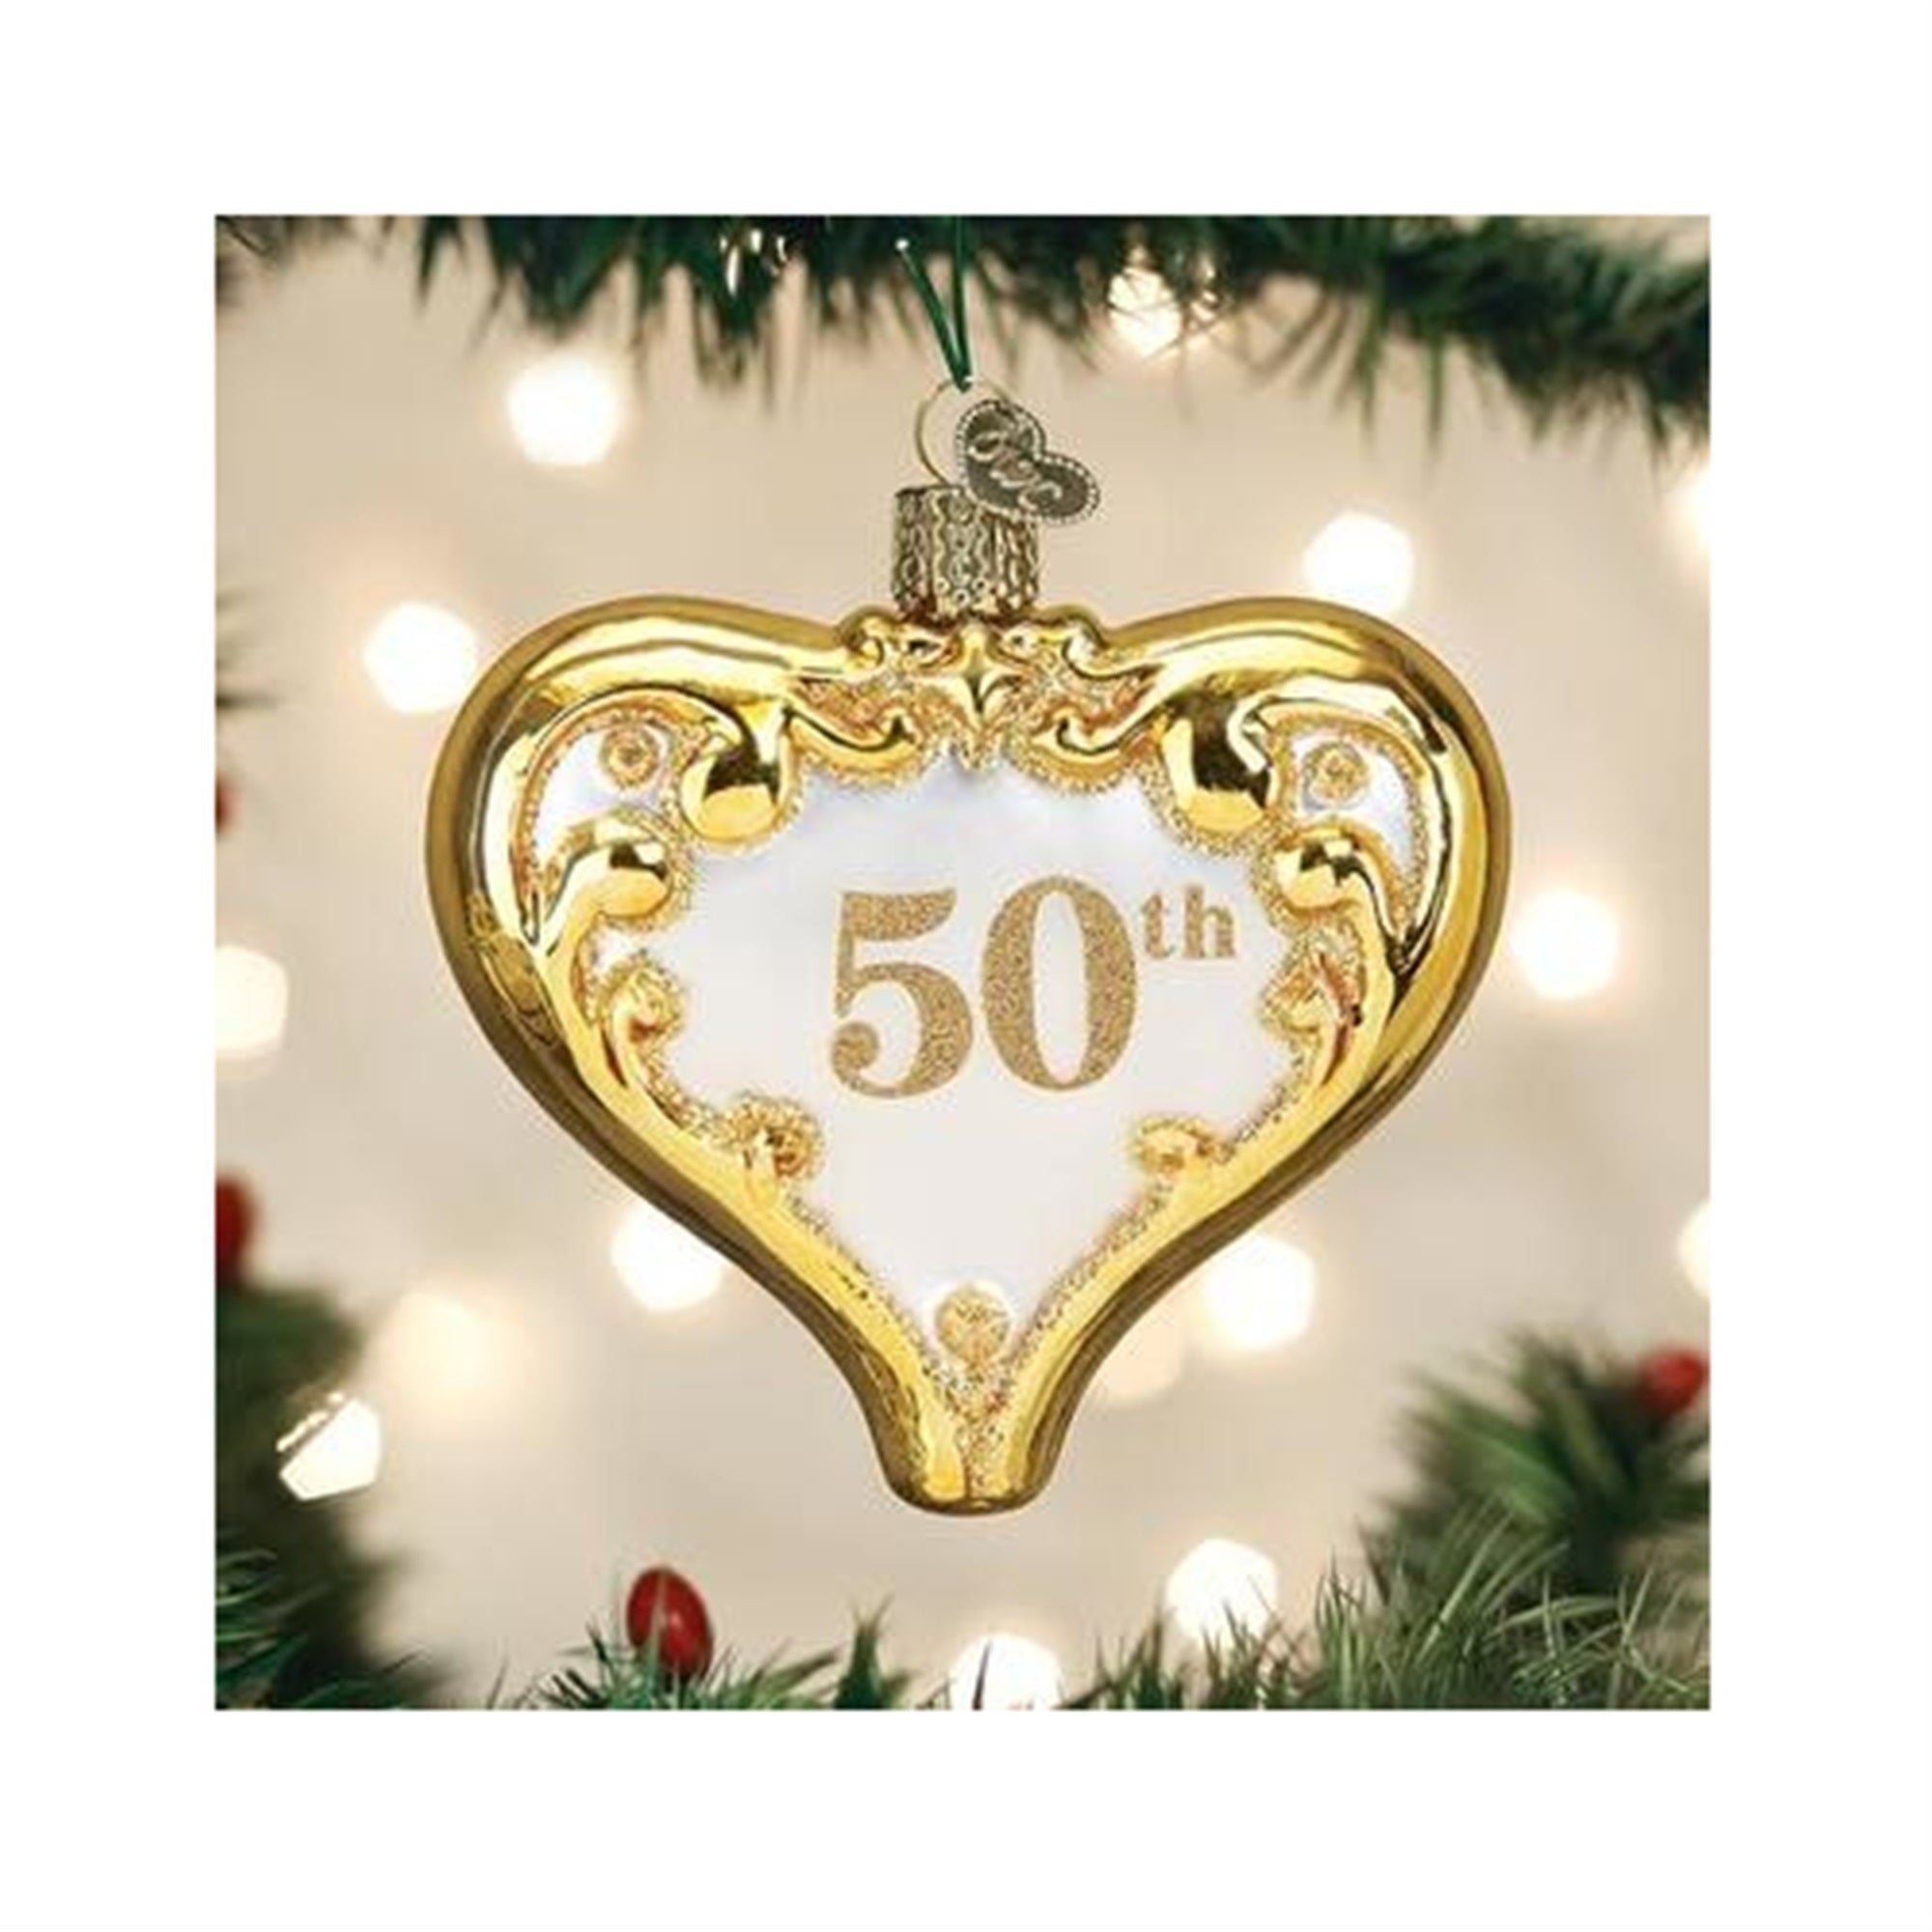 Old World Christmas Blown Glass Christmas Ornament, 50th Anniversary Heart